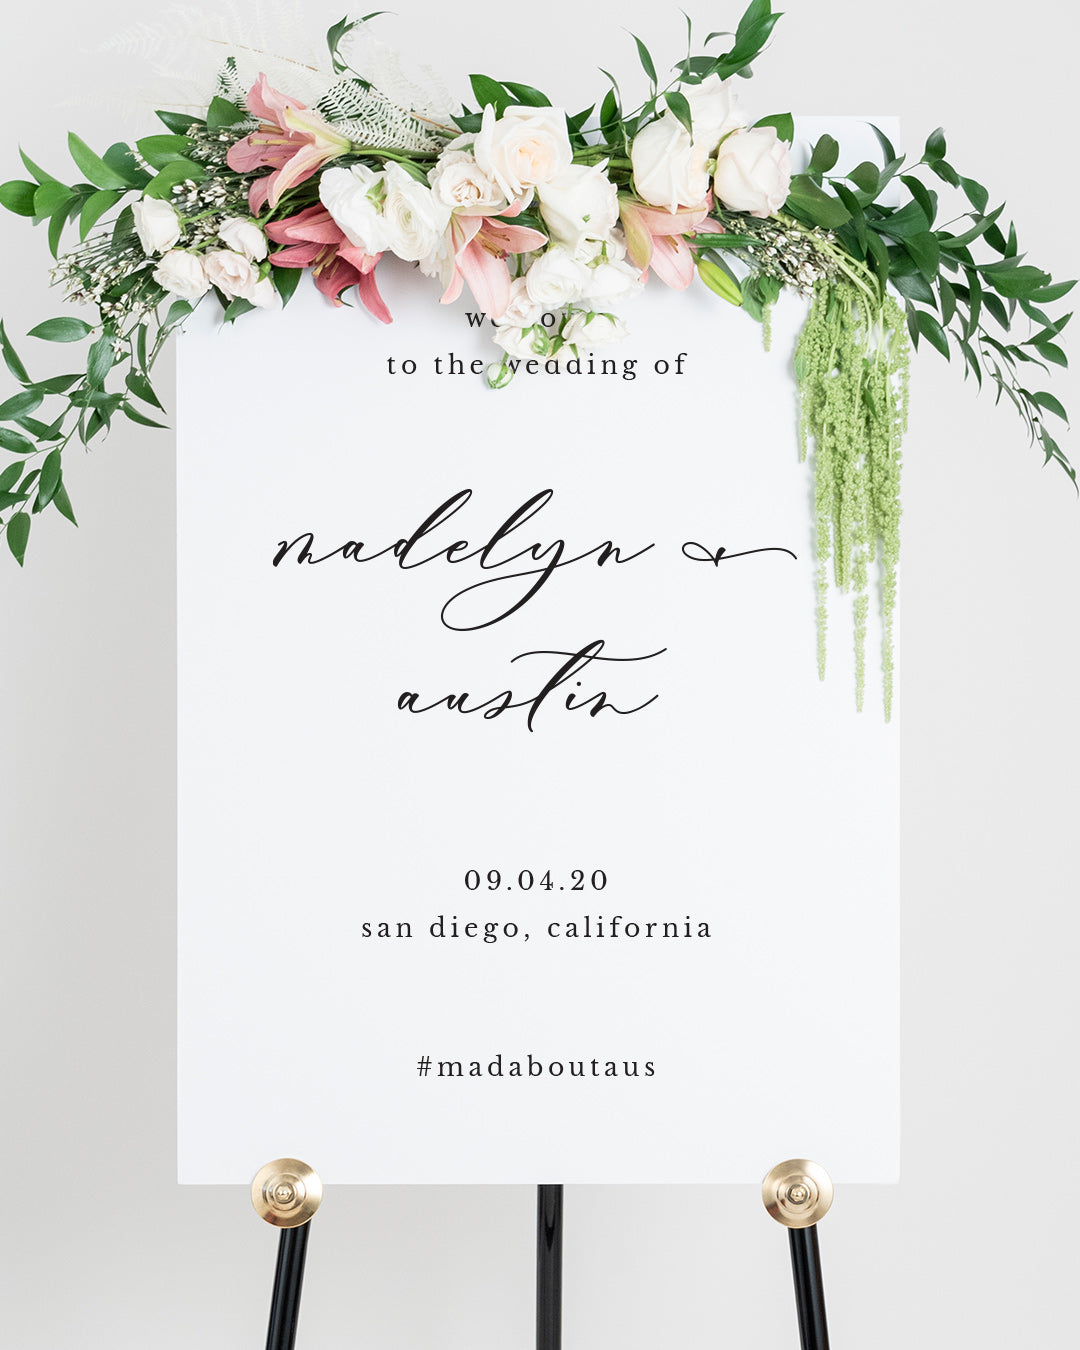 Wooden Easel - Wedding Sign Stand - Floor Easel For Welcome Sign - Large  Art Display - Event Signage Holder